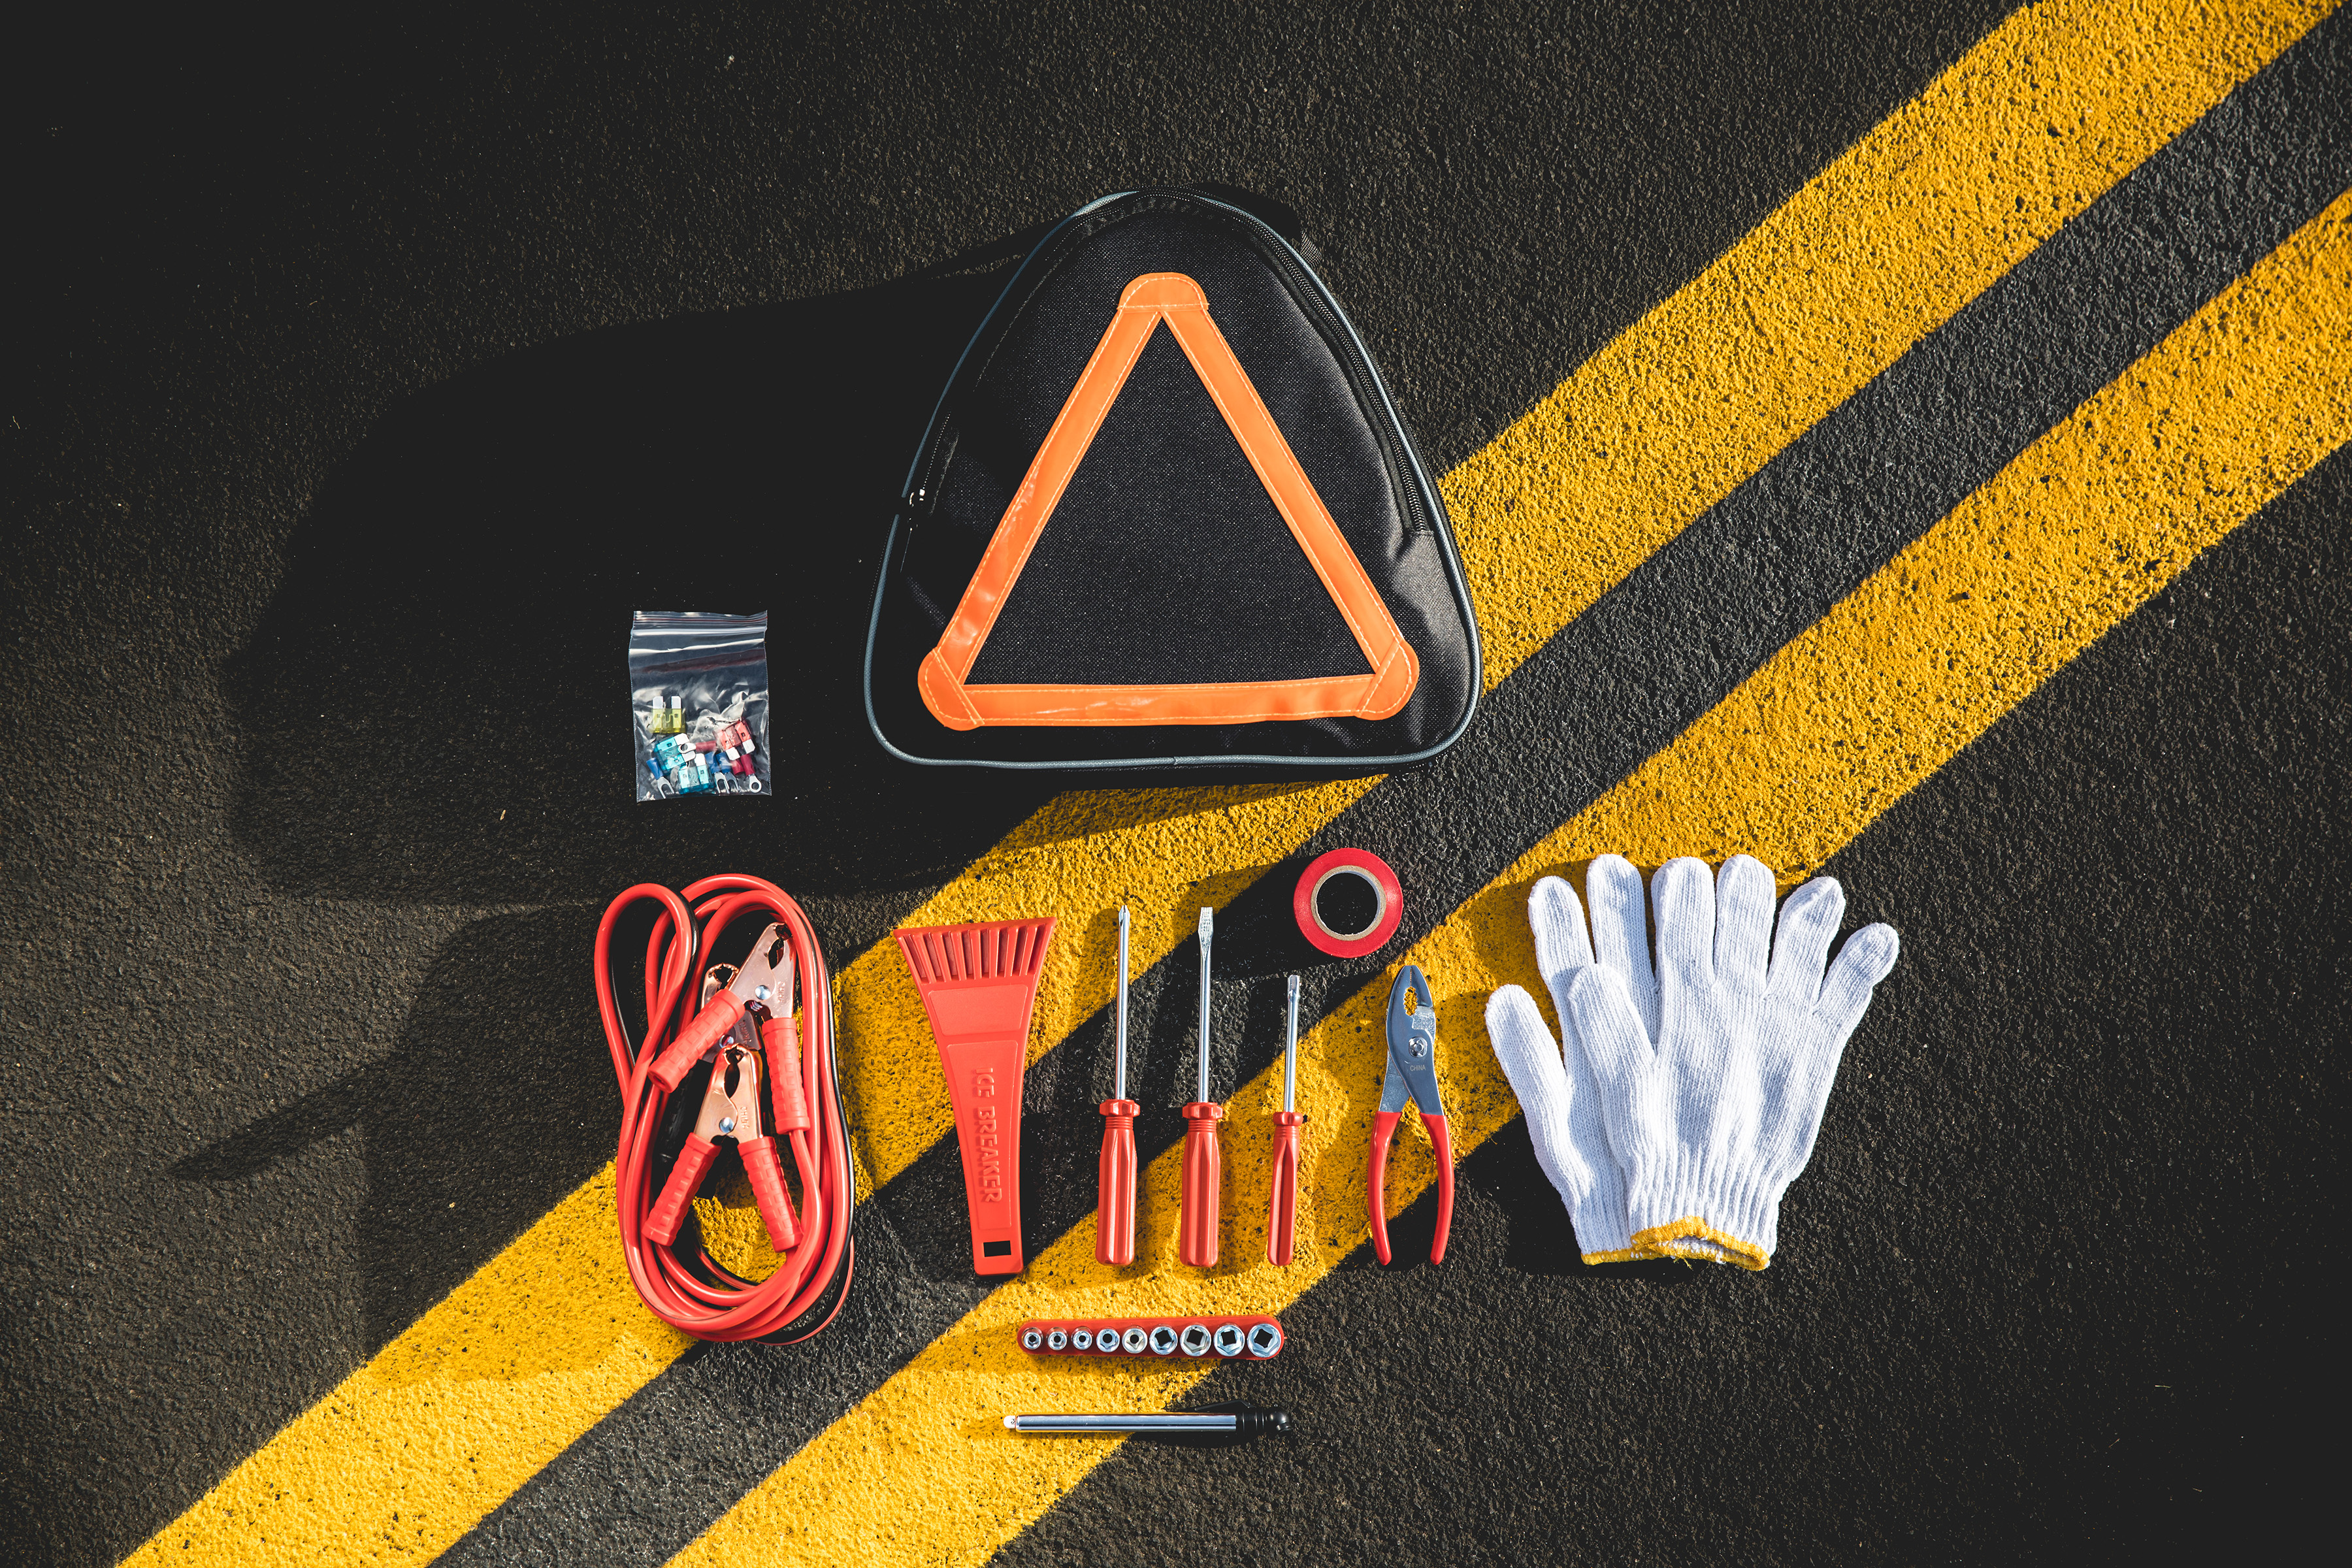 Pittsburgh Pirates - Roadside Emergency Car Kit